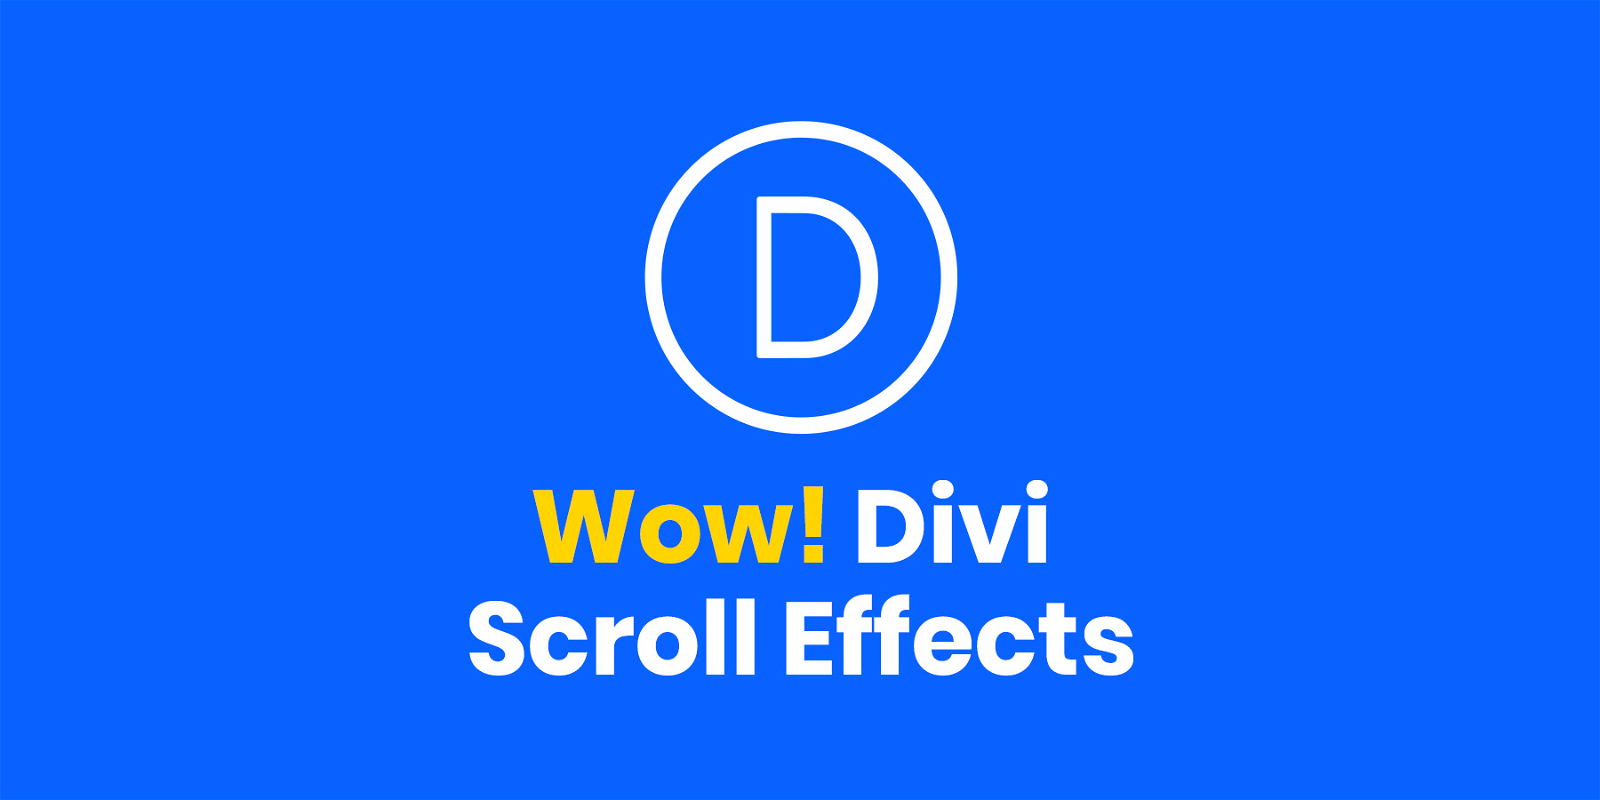 Divi Scroll Effects